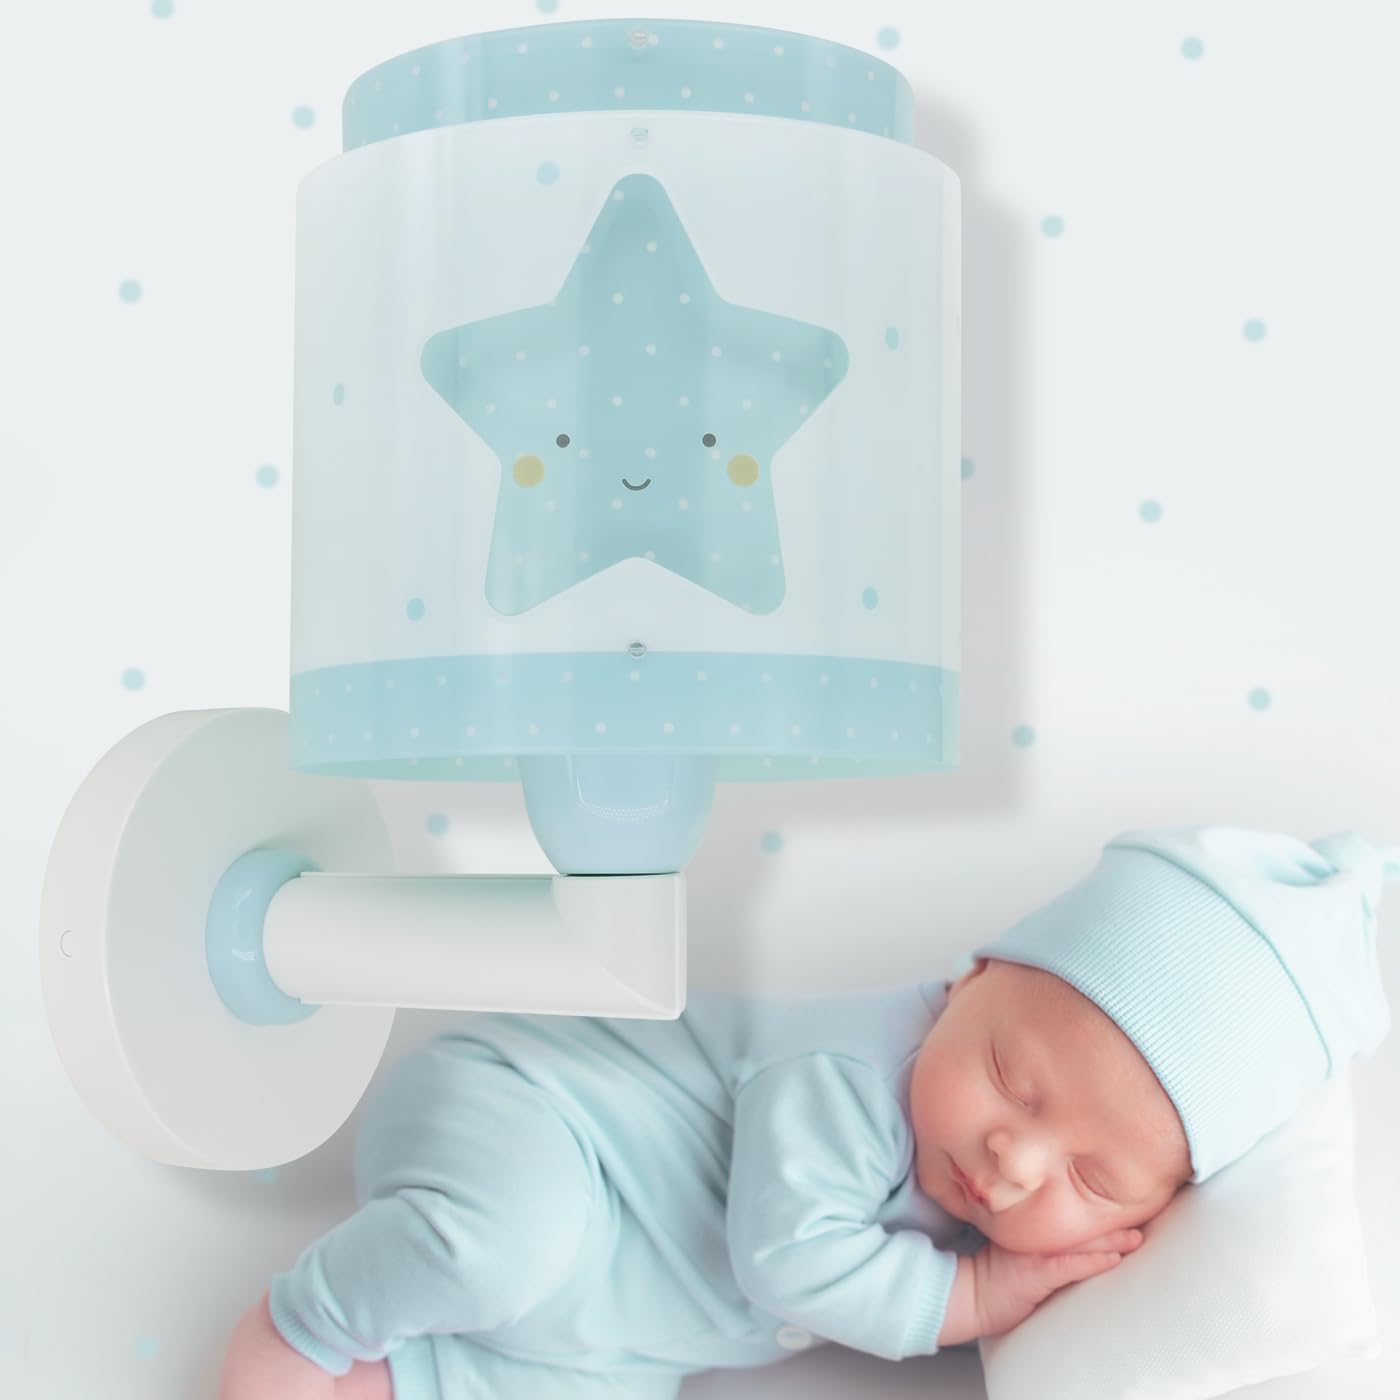 Dalber kinder Wandlampe, Kinderlampe Wandleuchte kinderzimmer Baby Dreams Stern Blau, 76019T, E27